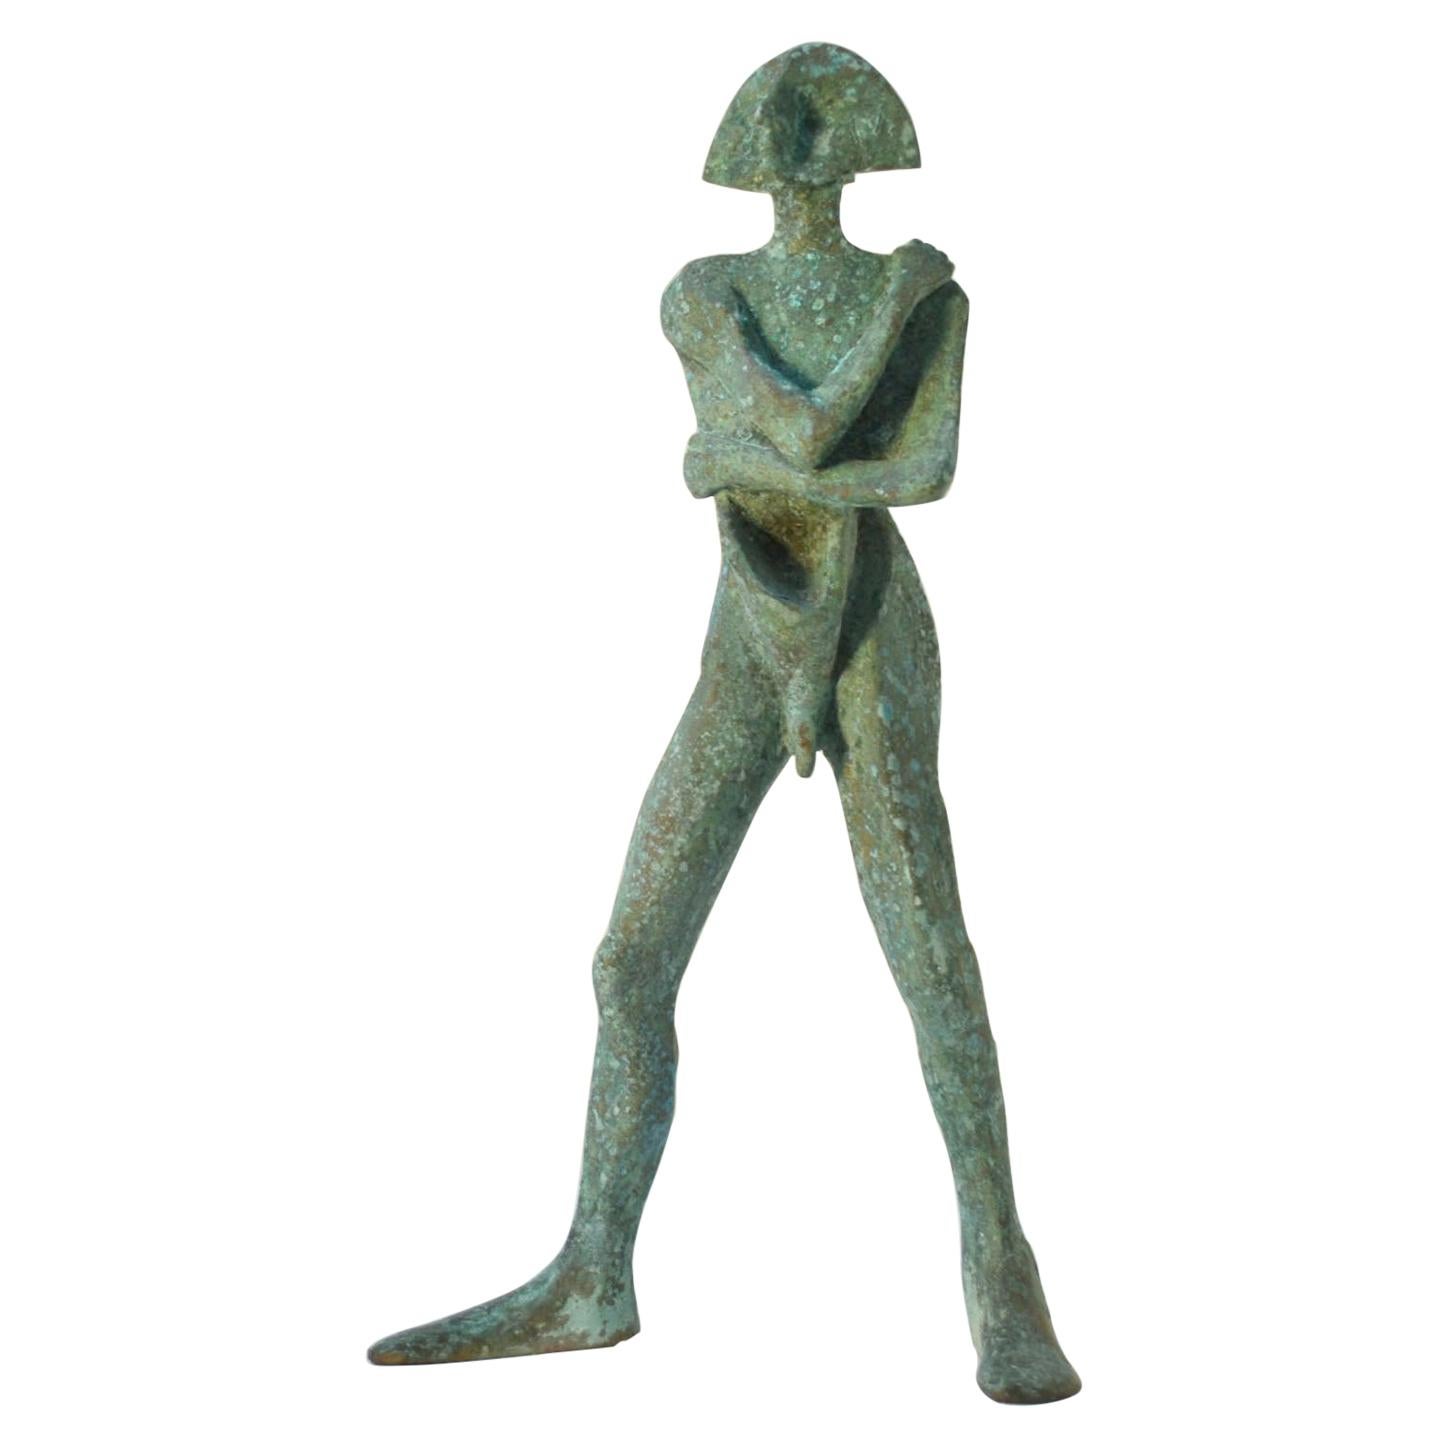 Sculpture en bronze 'Compass', homme debout avec patine verte